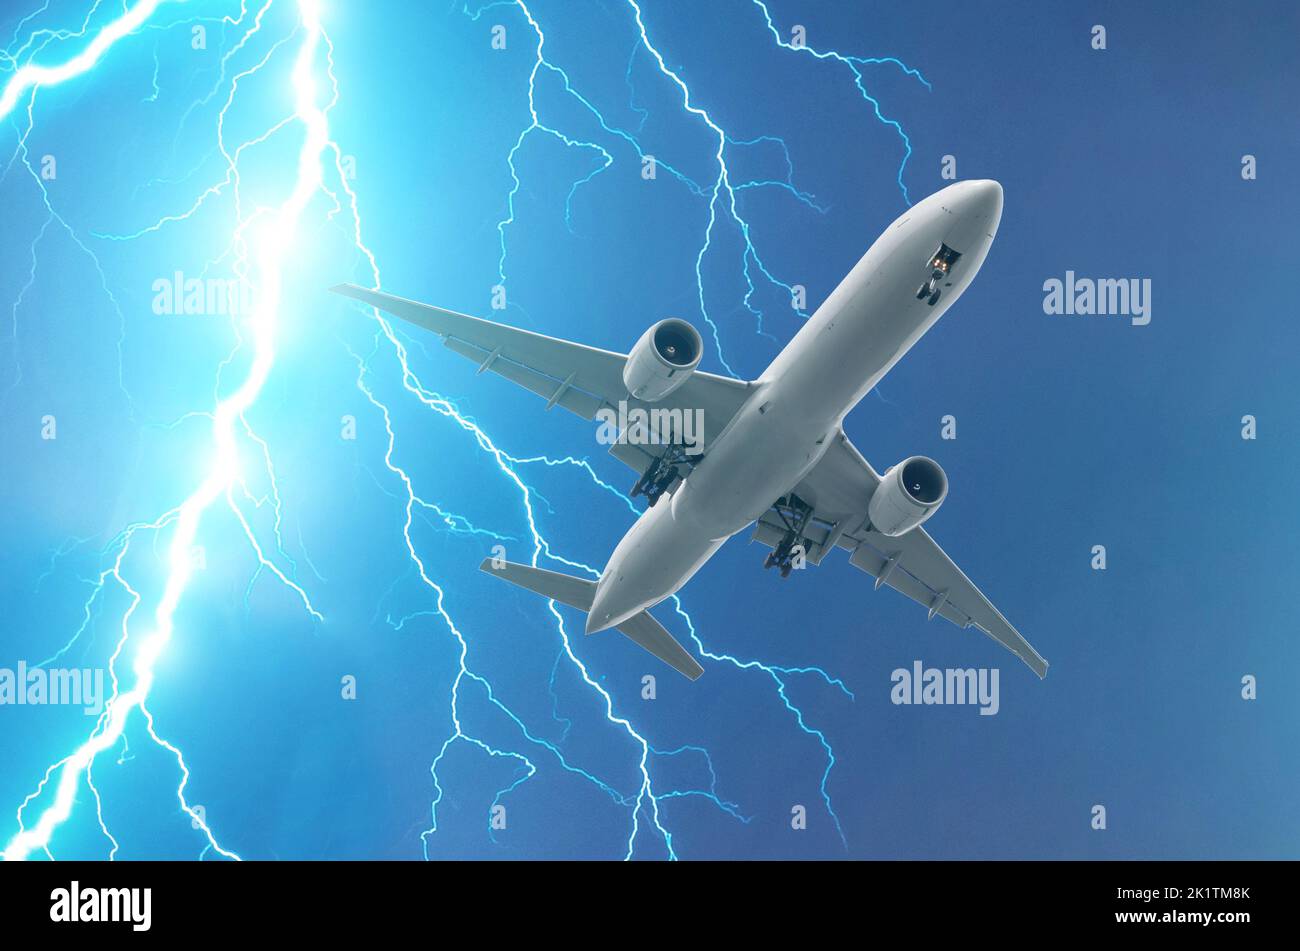 Powerful lightning strike in a thunderstorm near the plane. Stock Photo